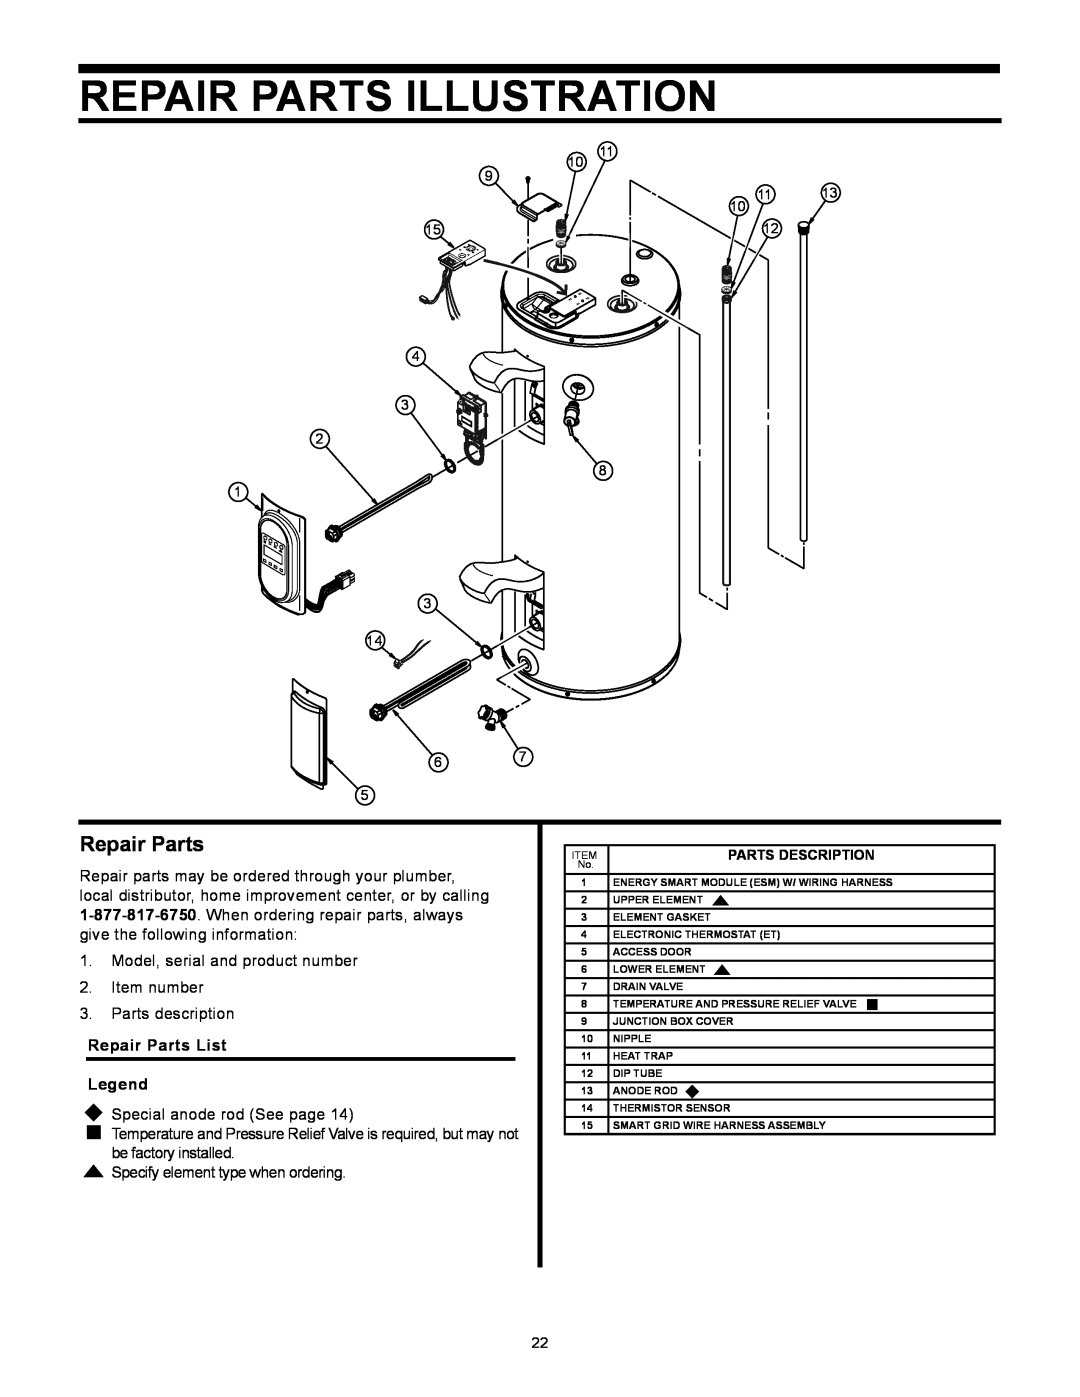 Whirlpool 318686-000 installation instructions Repair Parts Illustration, Repair Parts List Legend 